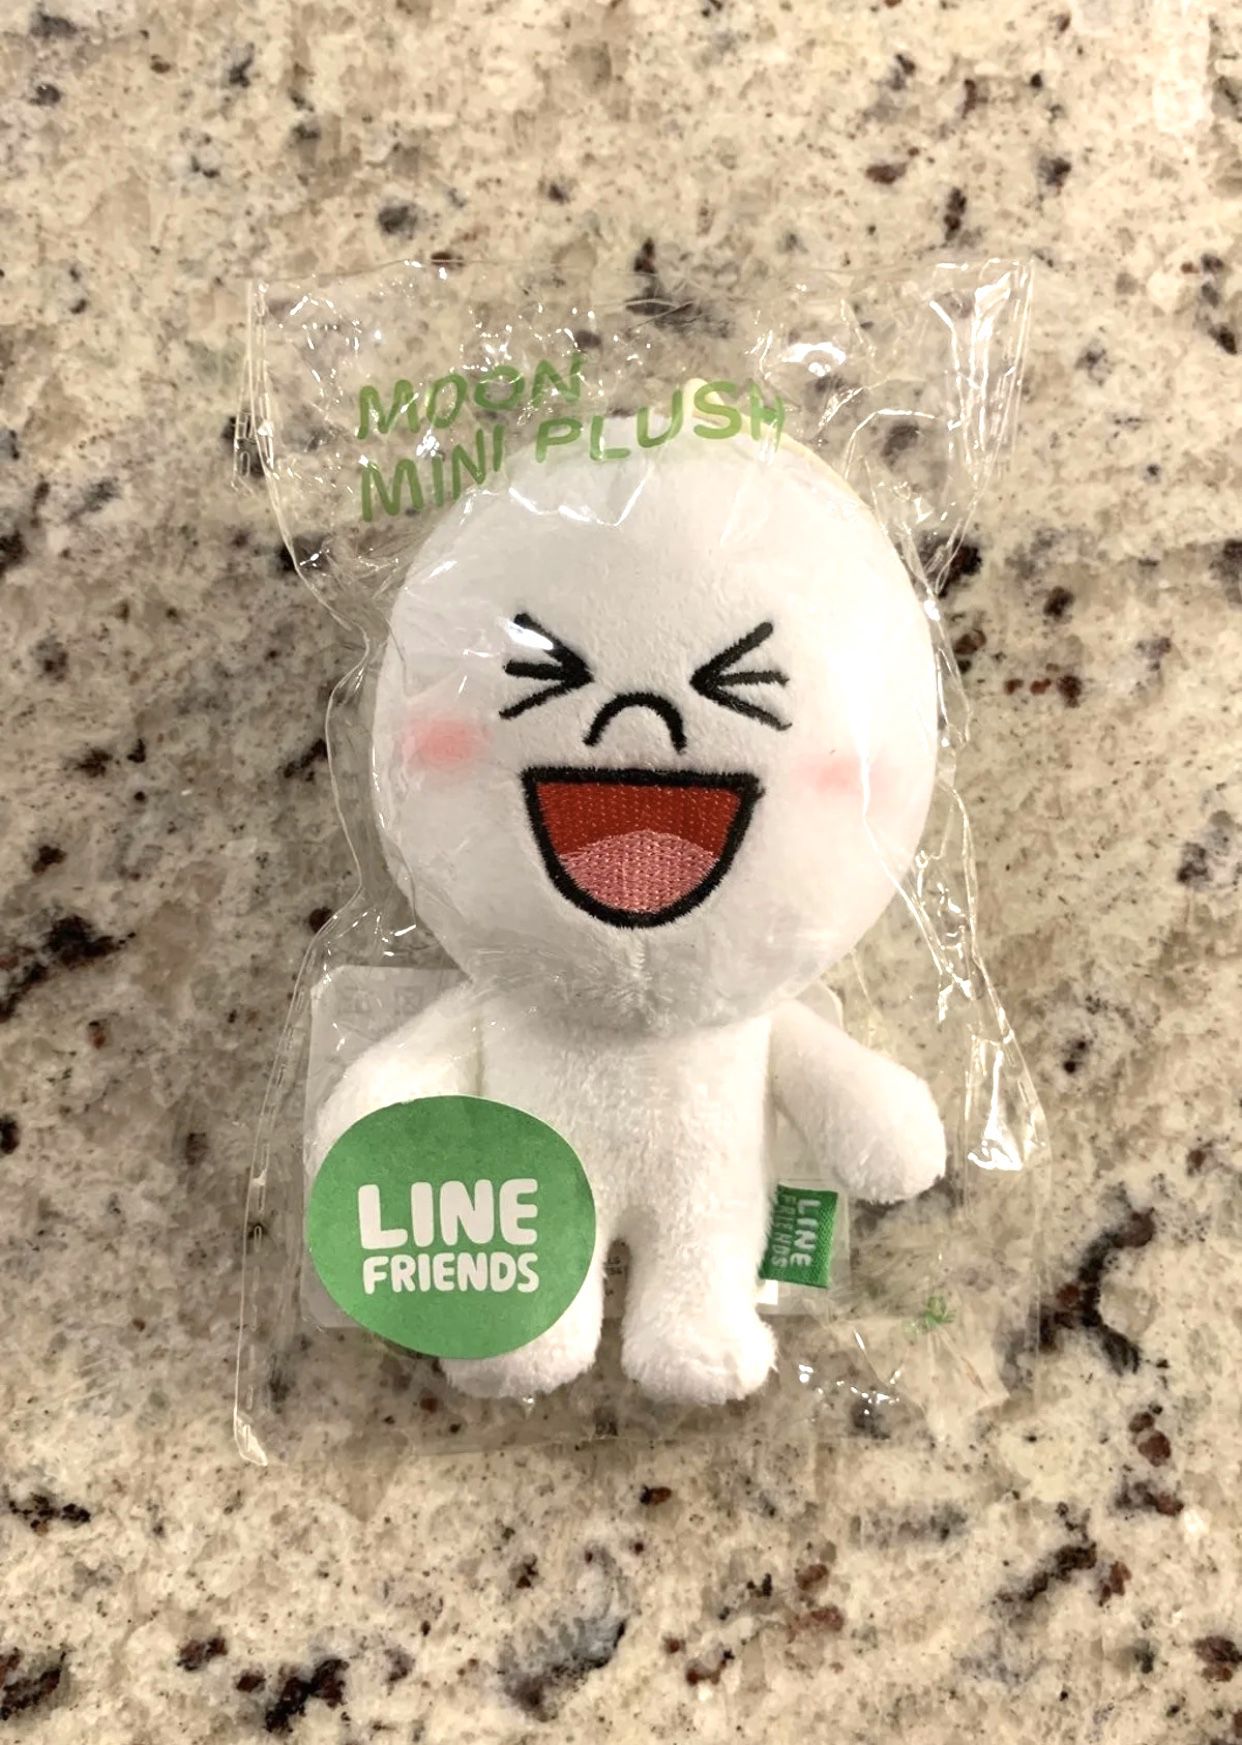 Line friend mini moon plushie plush from Korea